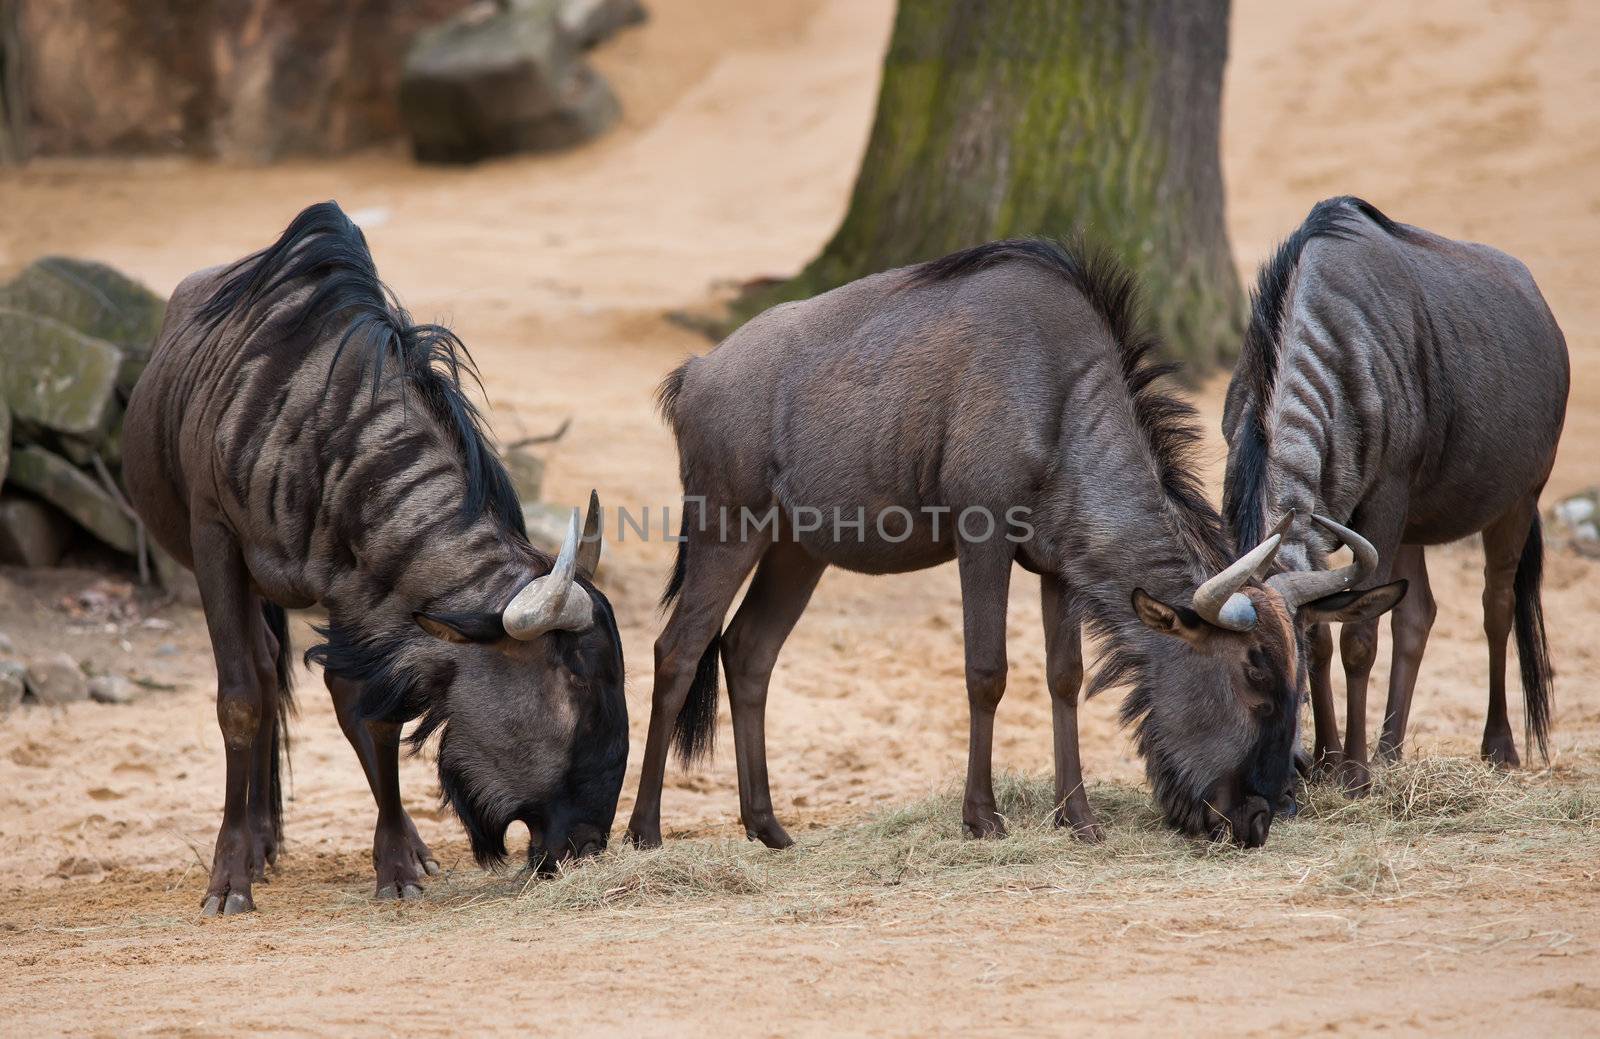 Grazing or pasturing wildebeests by Arsgera